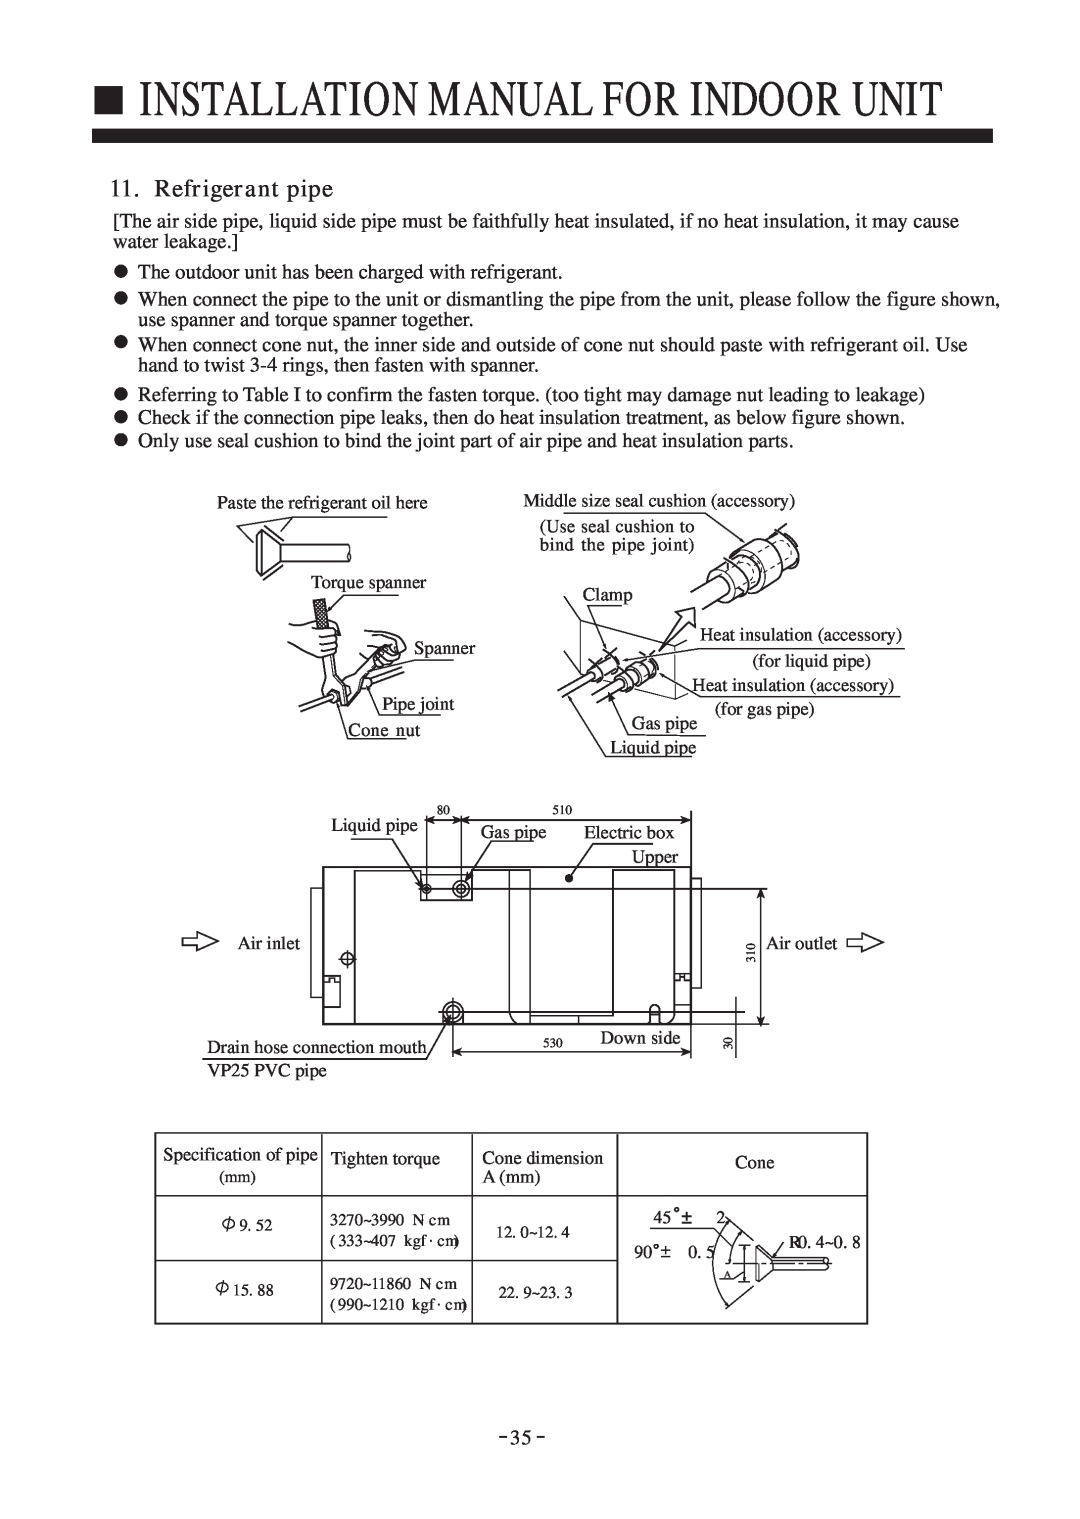 Haier HDU-24H03/H, HDU-42H03/H, HDU-28H03/H instruction manual Refrigerant pipe, Installation Manual For Indoor Unit 